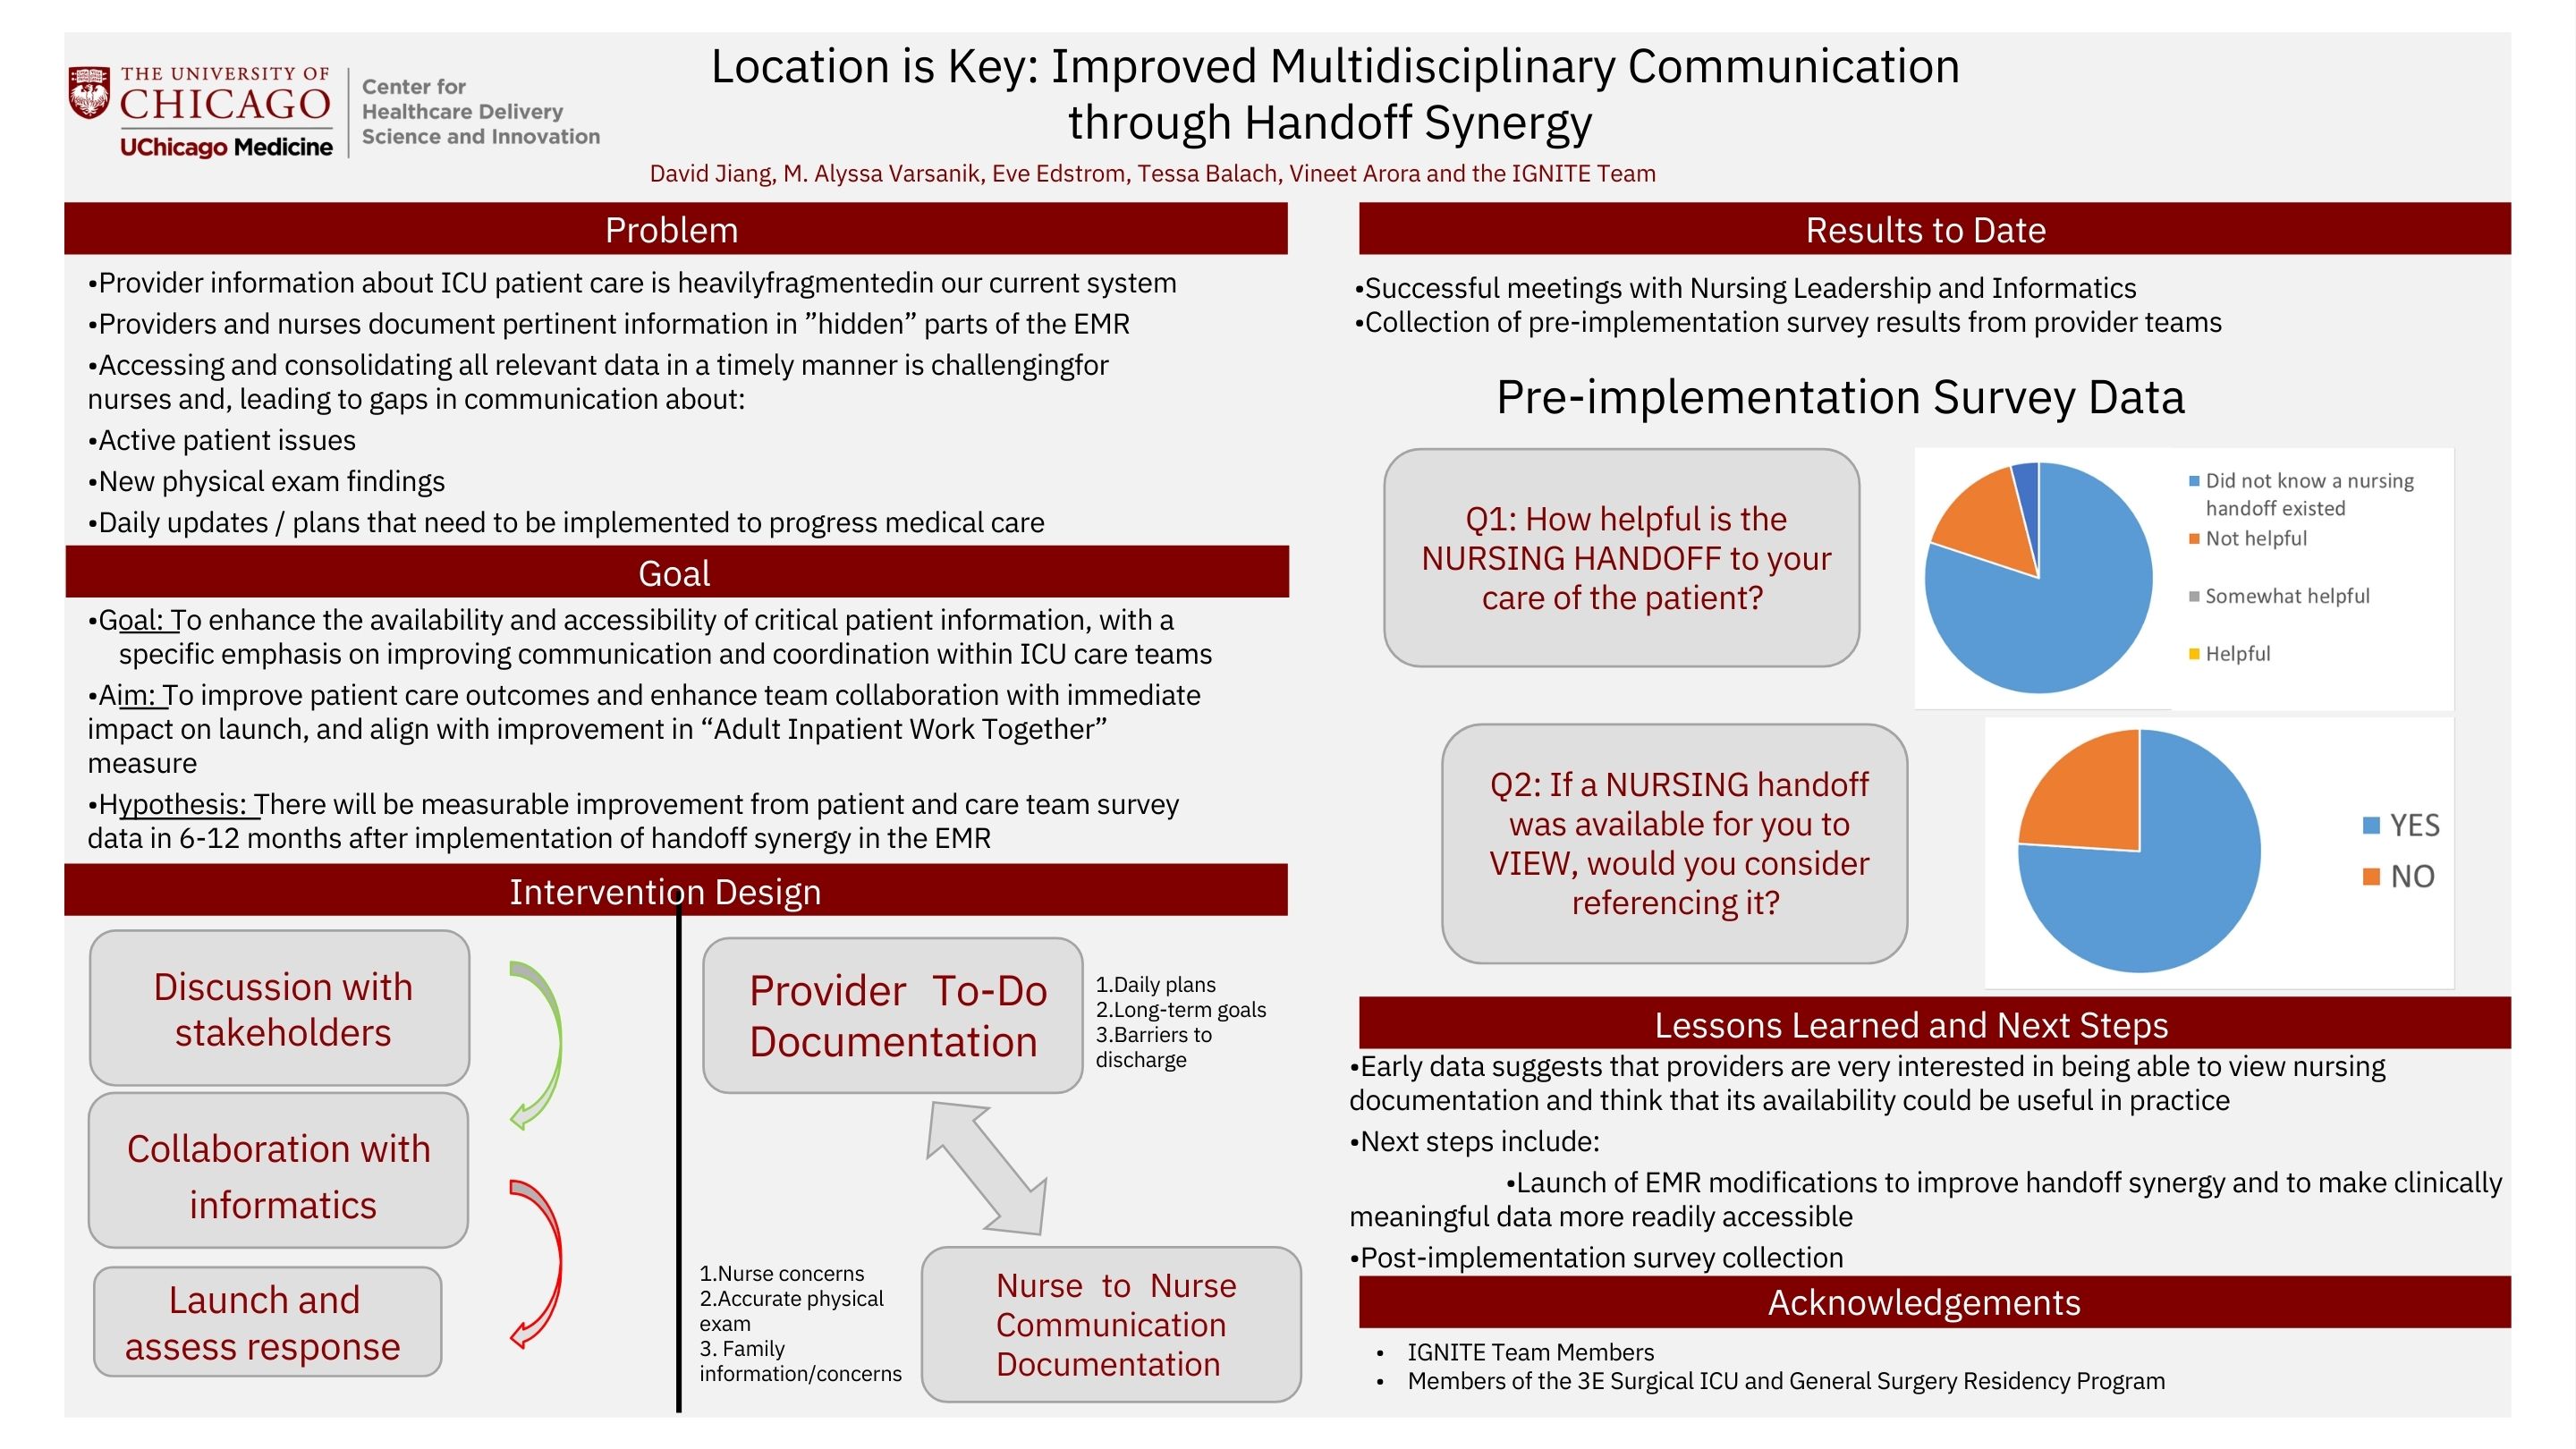 JIANG_Location is Key Improved Multidisciplinary Communication through Handoff Synergy